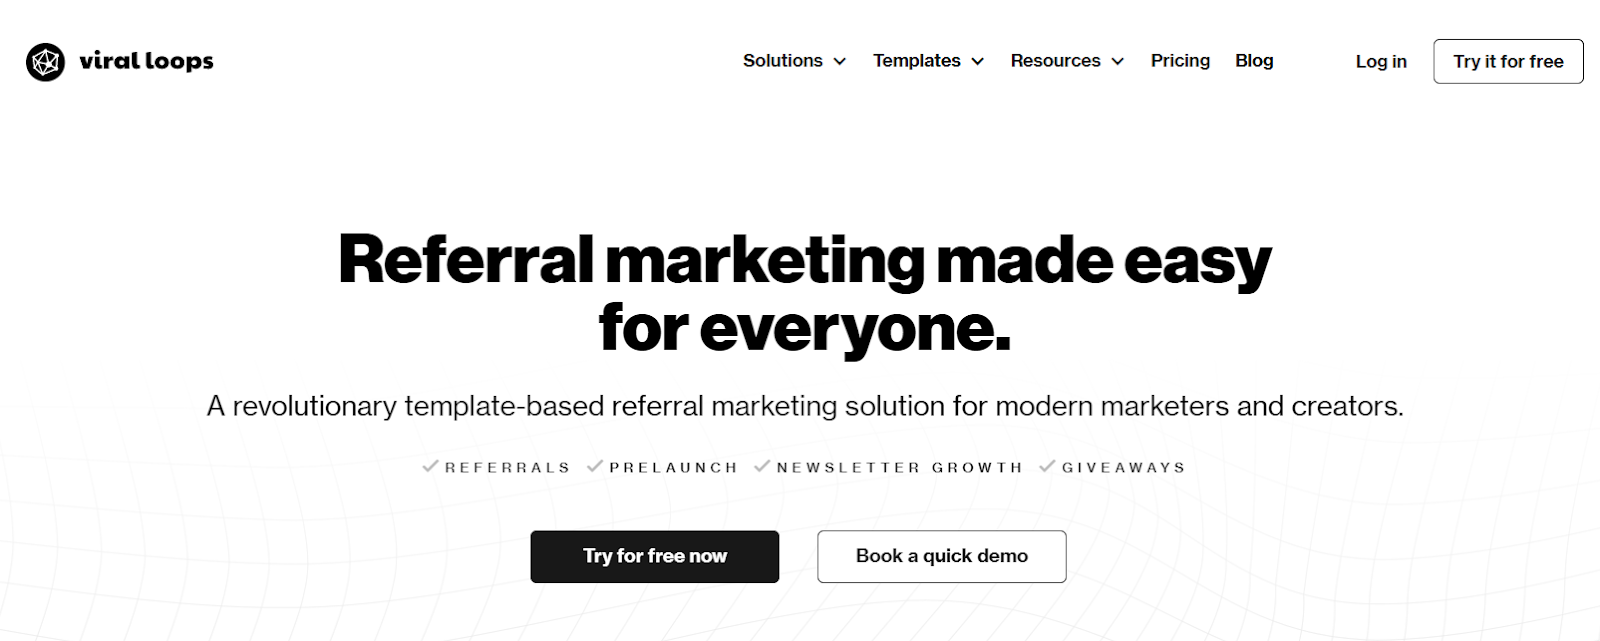 Viral Loops referral marketing software